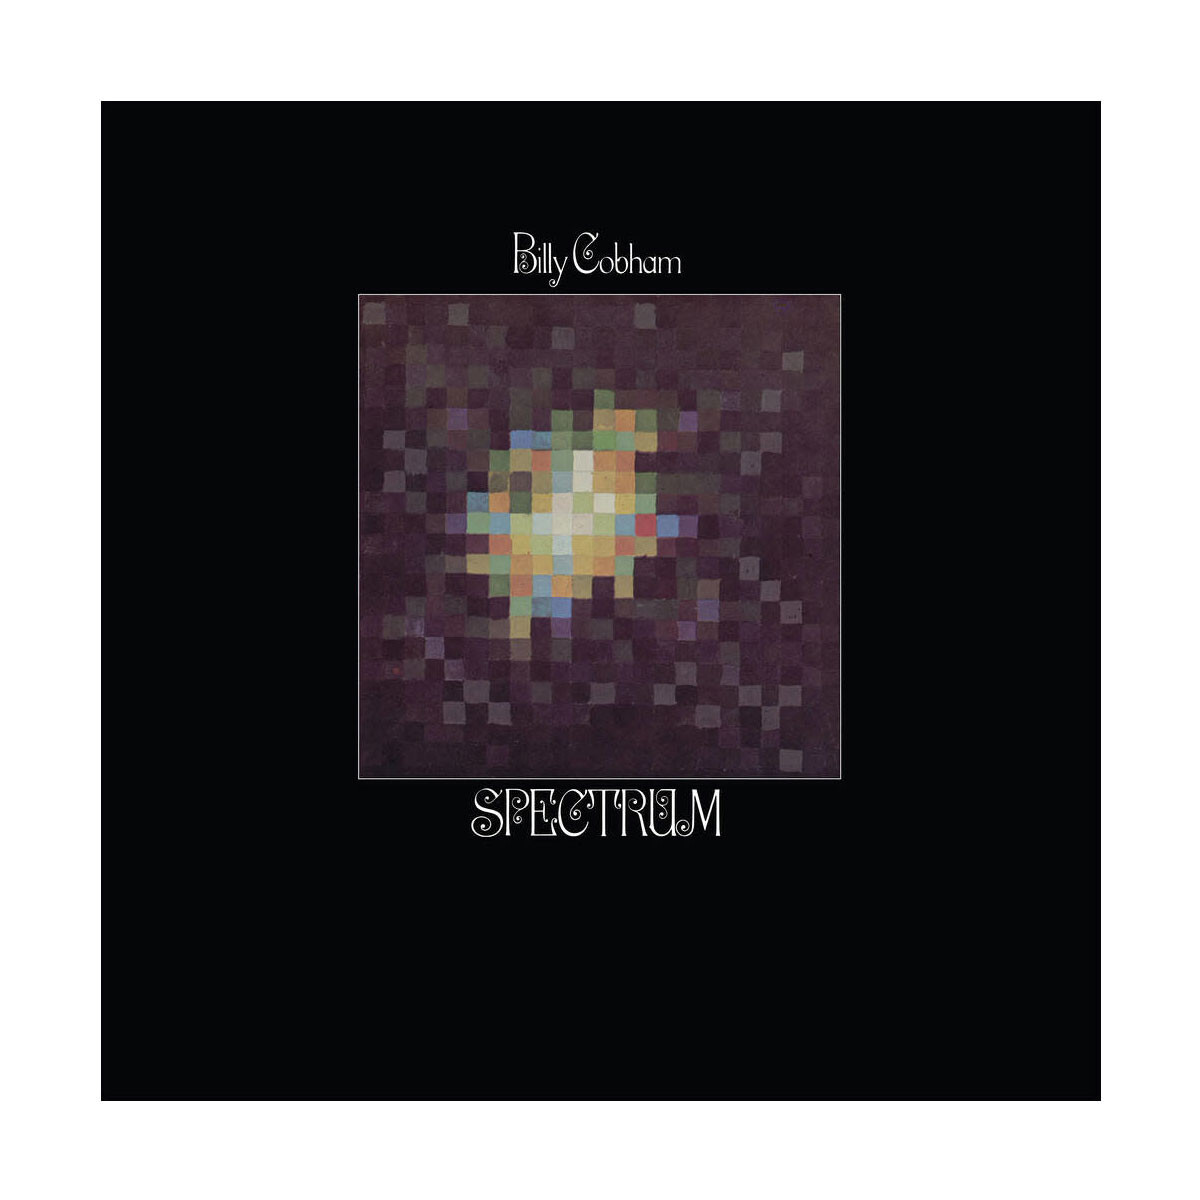 Billy Cobham - Spectrum (clear Vinyl) (syeor) (indies) - Vinyl - Vinilo 